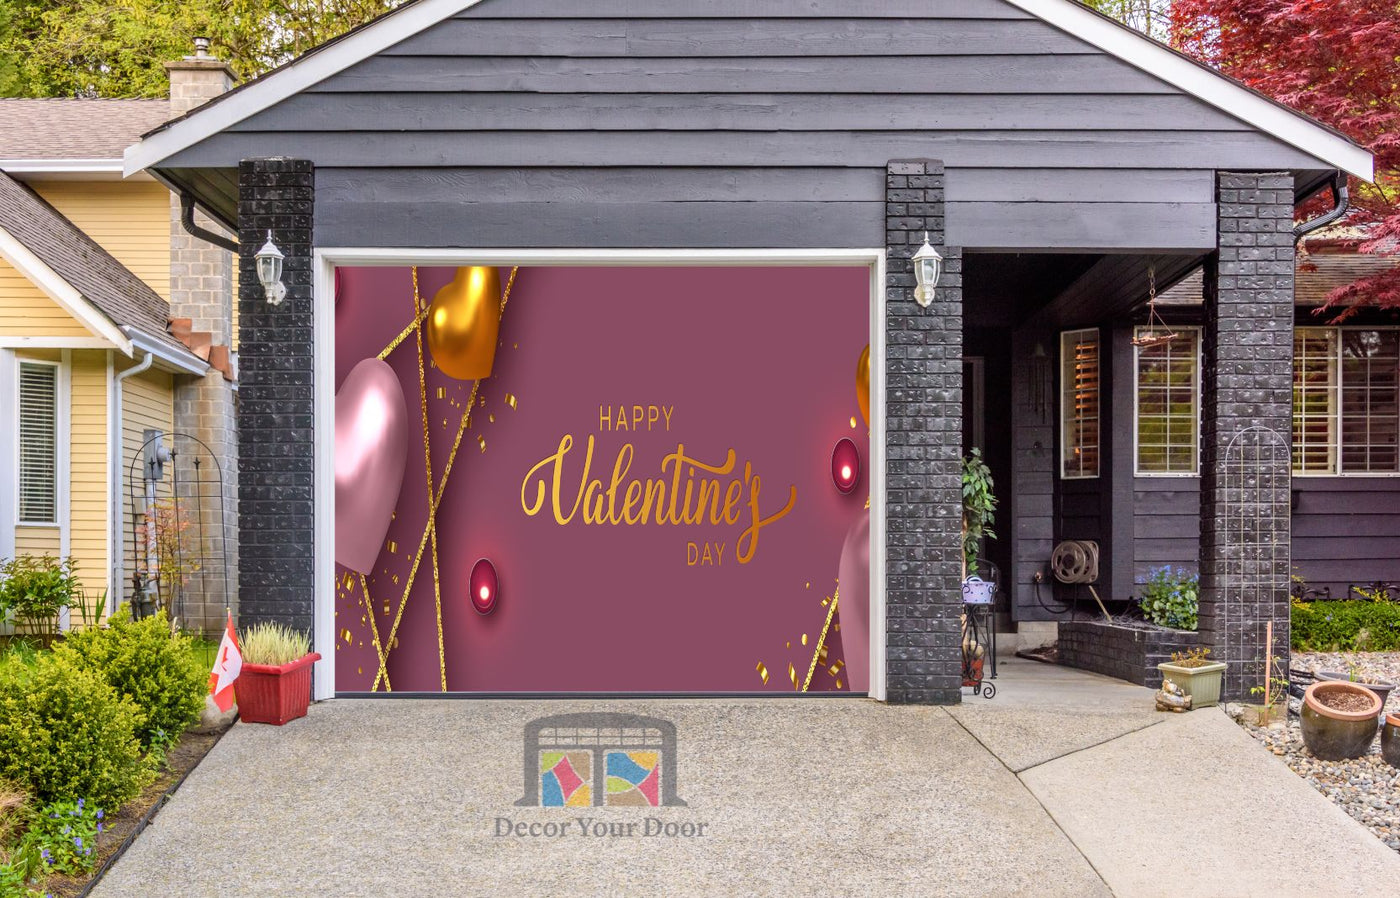 Happy Valentines Day Garage Door Cover Wrap Mural Home Decoration (Design #13)